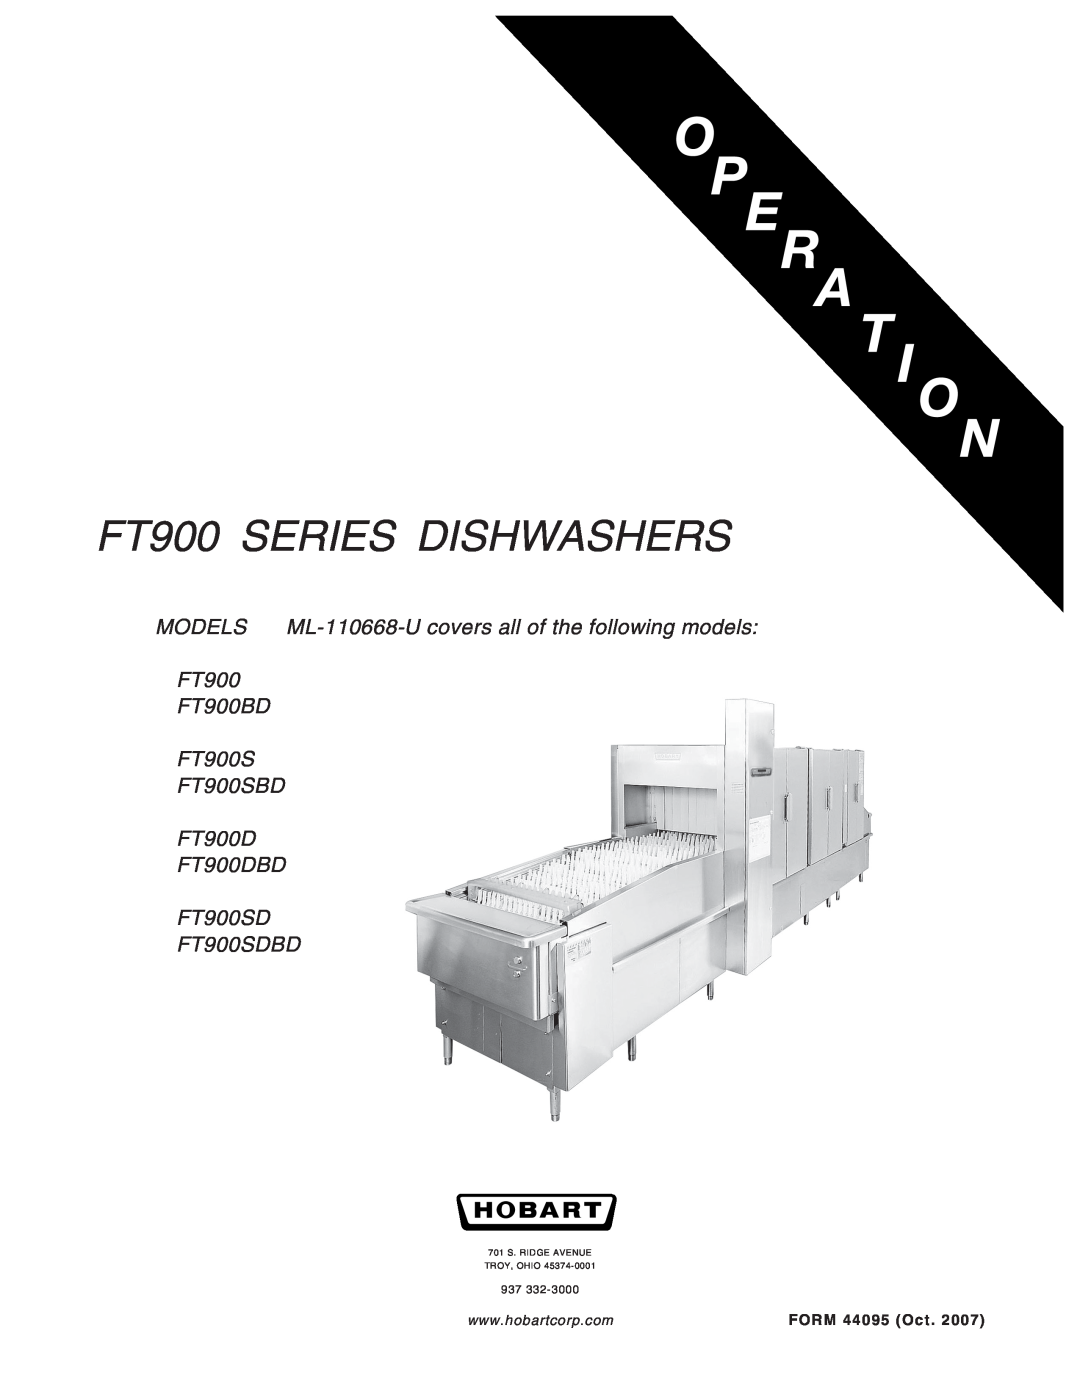 Hobart manual FT900 SERIES DISHWASHERS, FT900 FT900BD FT900S FT900SBD FT900D FT900DBD, FT900SD FT900SDBD 